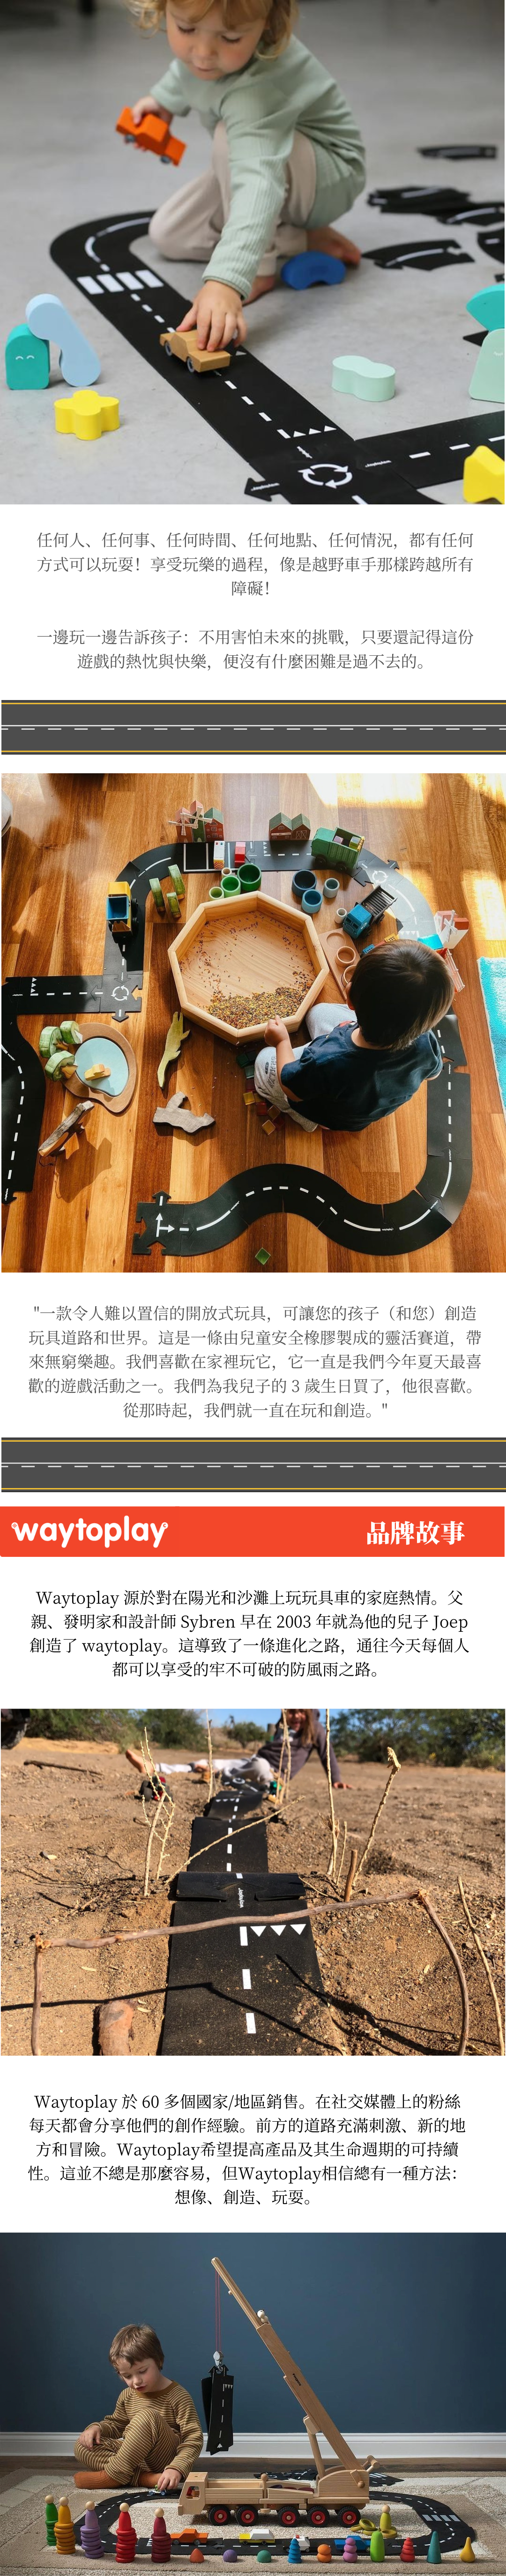 Waytoplay 道路搭建益智遊戲玩具